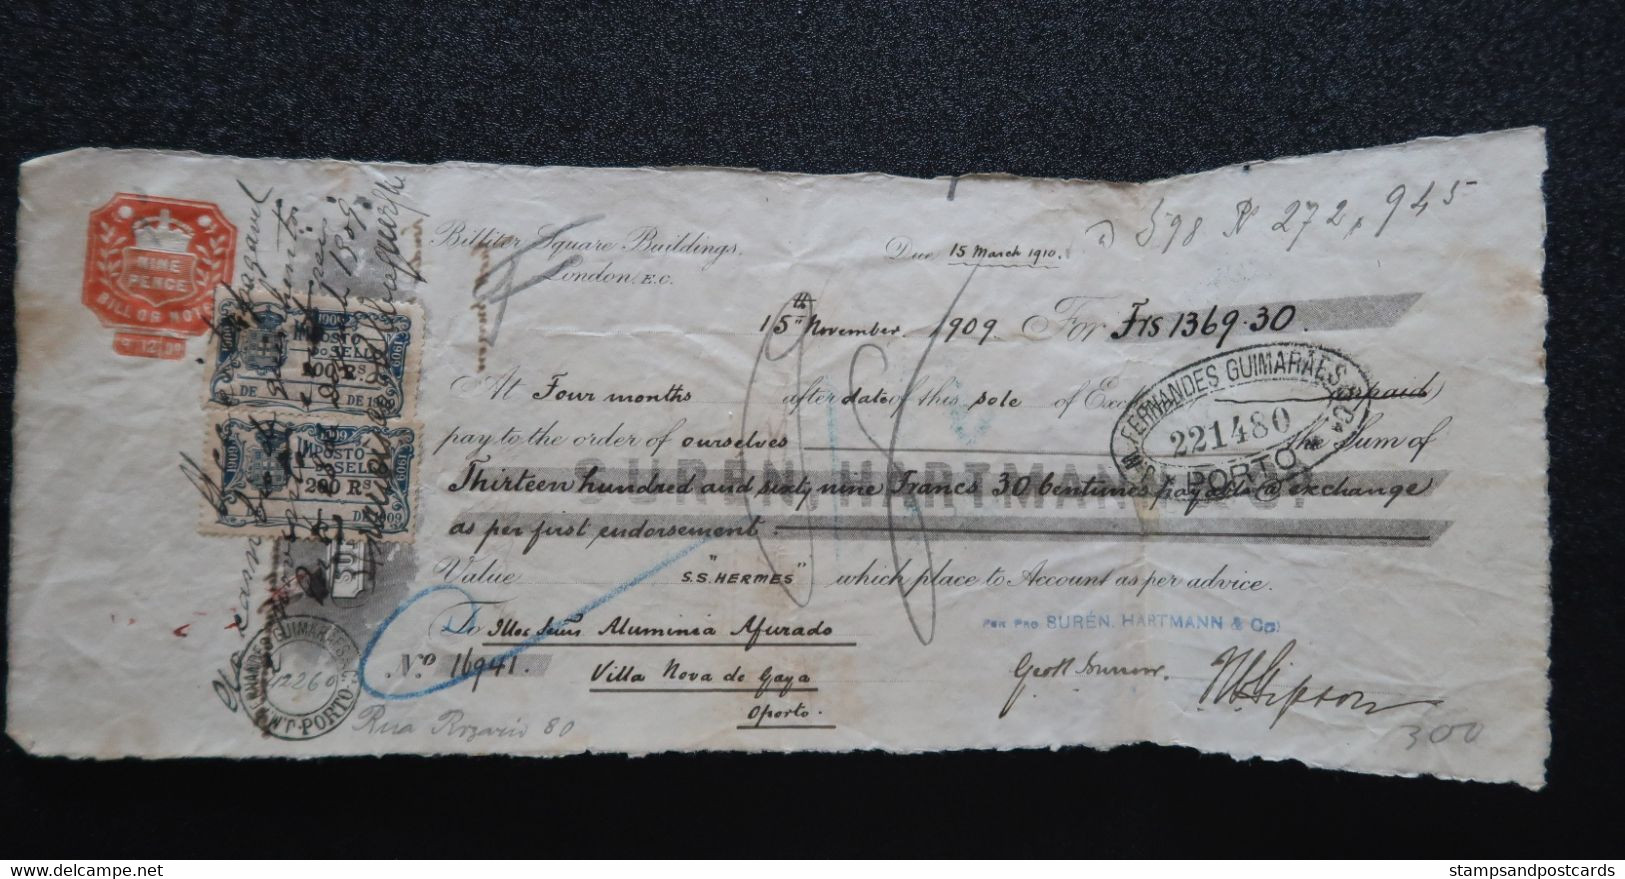 Royaume Uni Portugal Lettre De Change 1909 Timbre Fiscal Bateau S/s Hermes Ship Bill United Kingdom Revenue Stamp - Briefe U. Dokumente